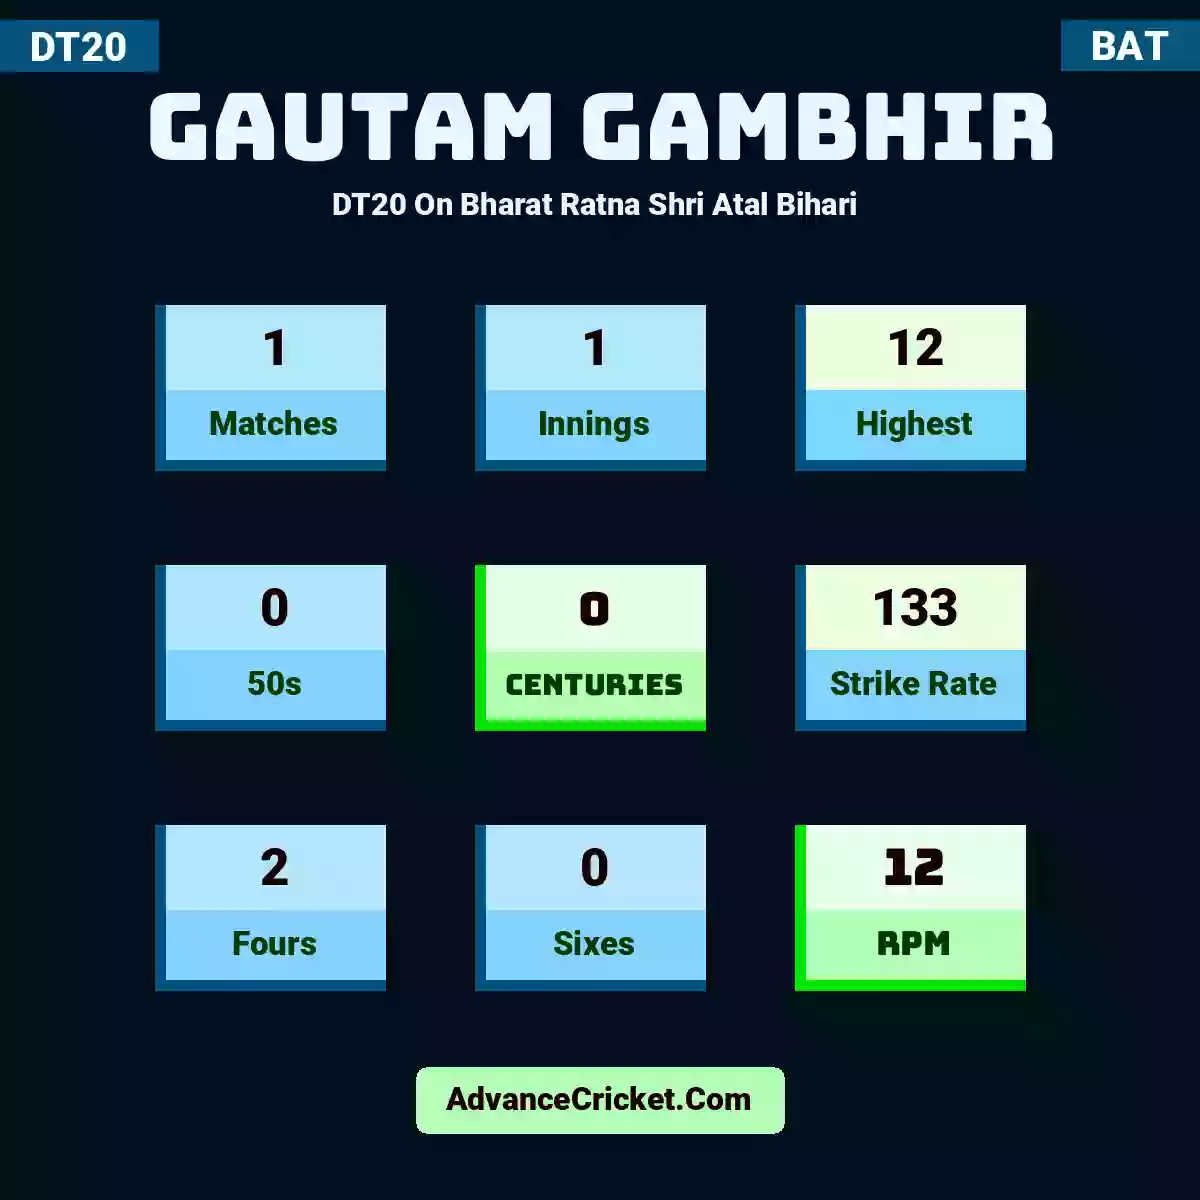 Gautam Gambhir DT20  On Bharat Ratna Shri Atal Bihari , Gautam Gambhir played 1 matches, scored 12 runs as highest, 0 half-centuries, and 0 centuries, with a strike rate of 133. G.Gambhir hit 2 fours and 0 sixes, with an RPM of 12.